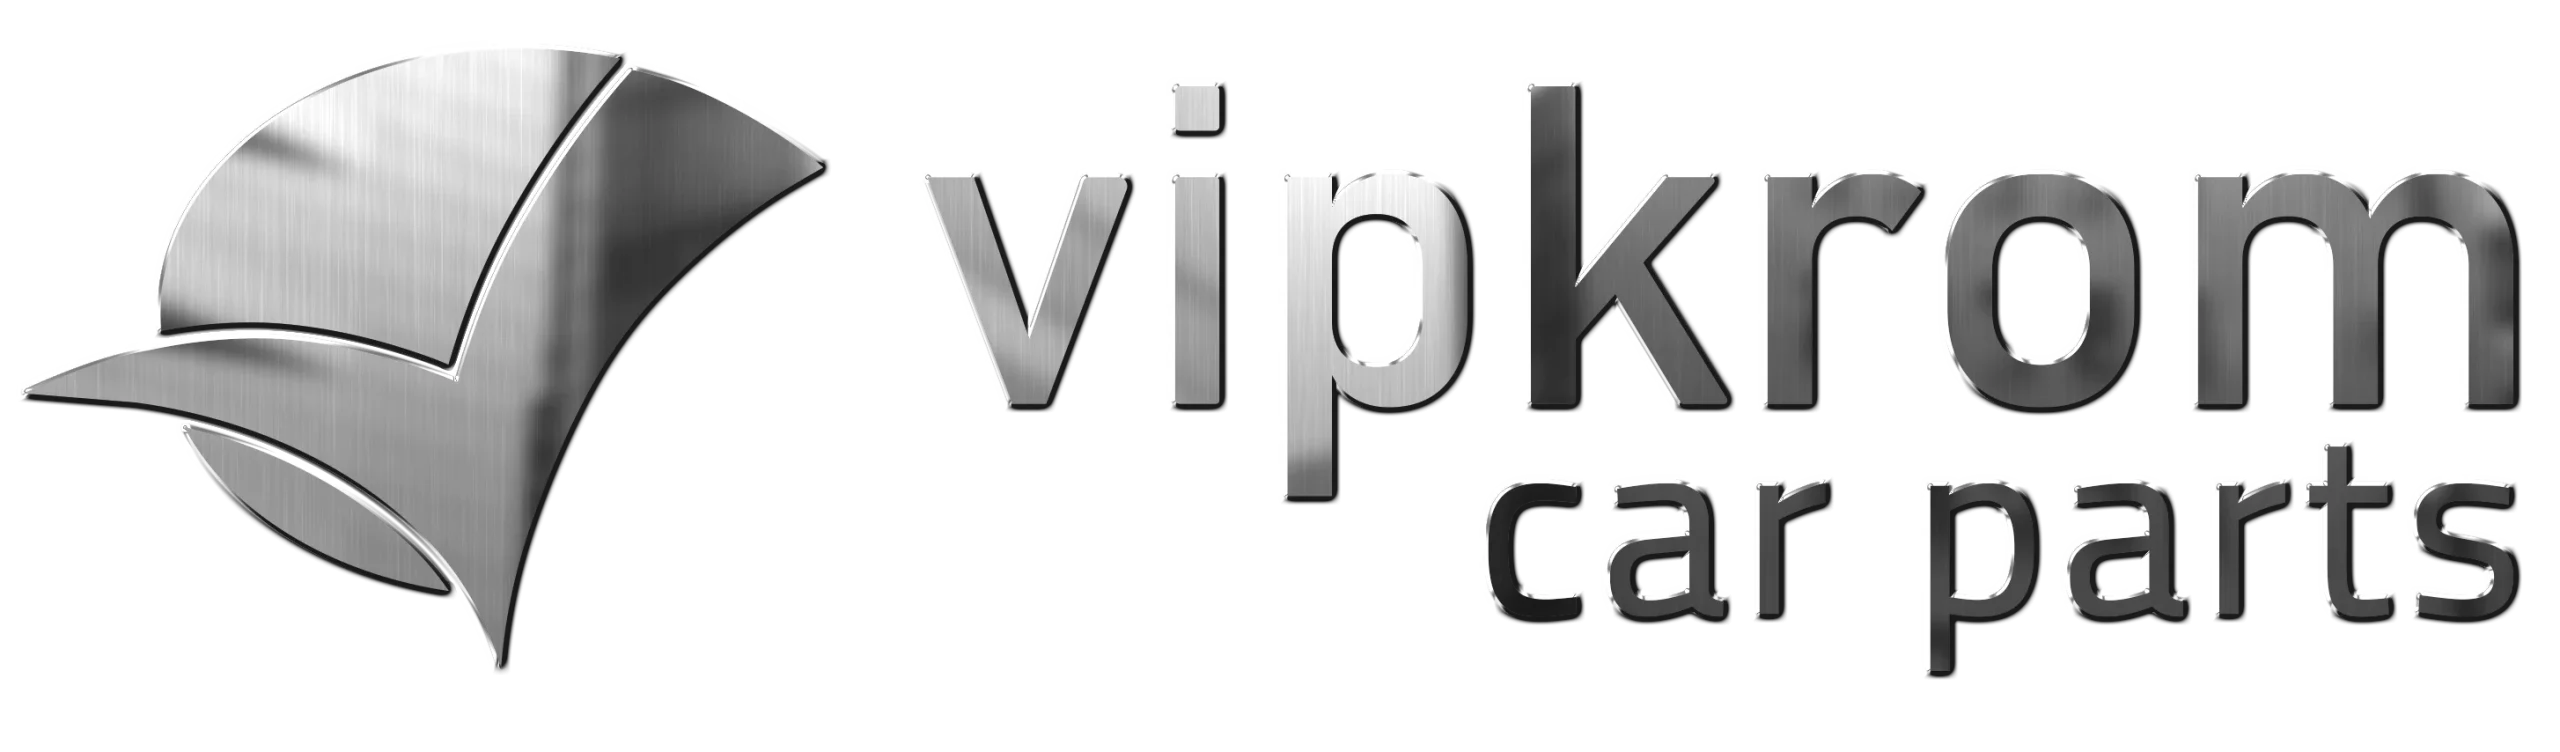 vipkrom logo 1 1 scaled